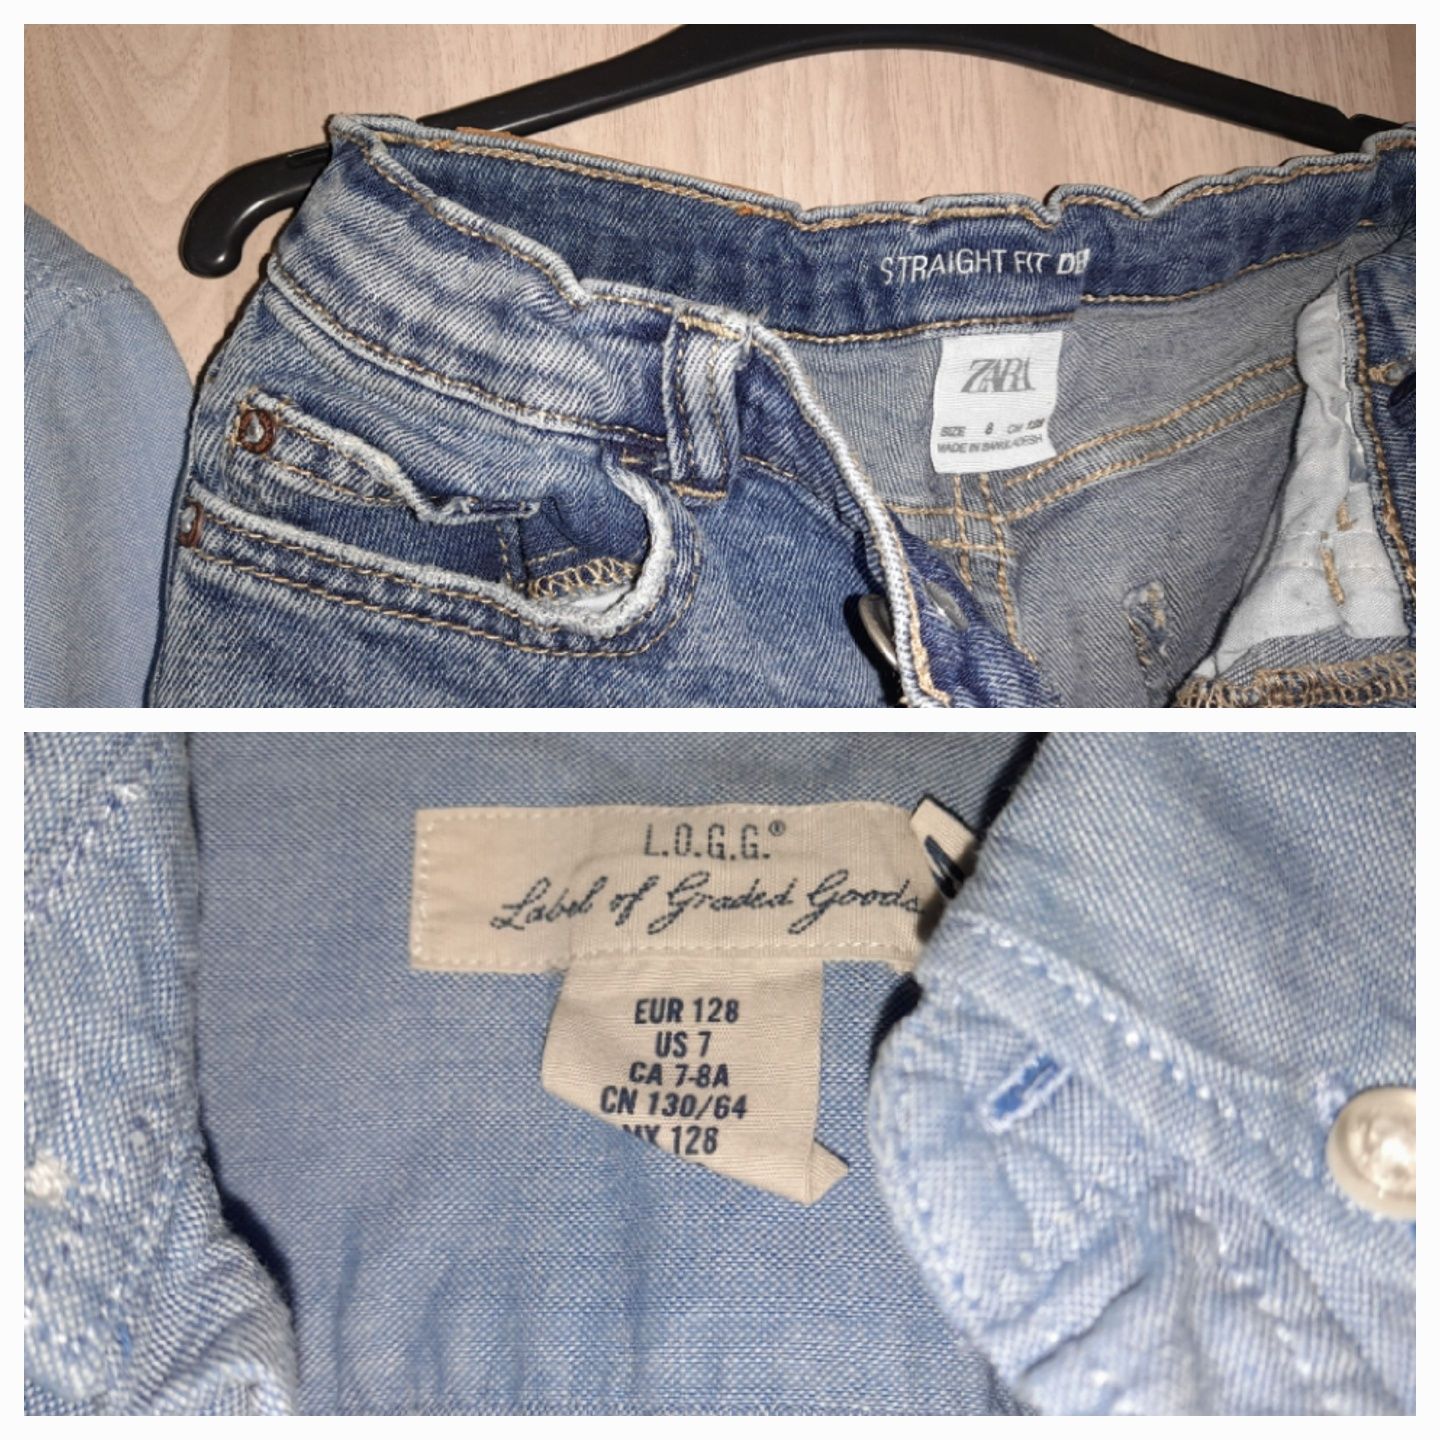 Lot 10 articole 128-134 Zara HM(,pantaloni,bluze,camasi)